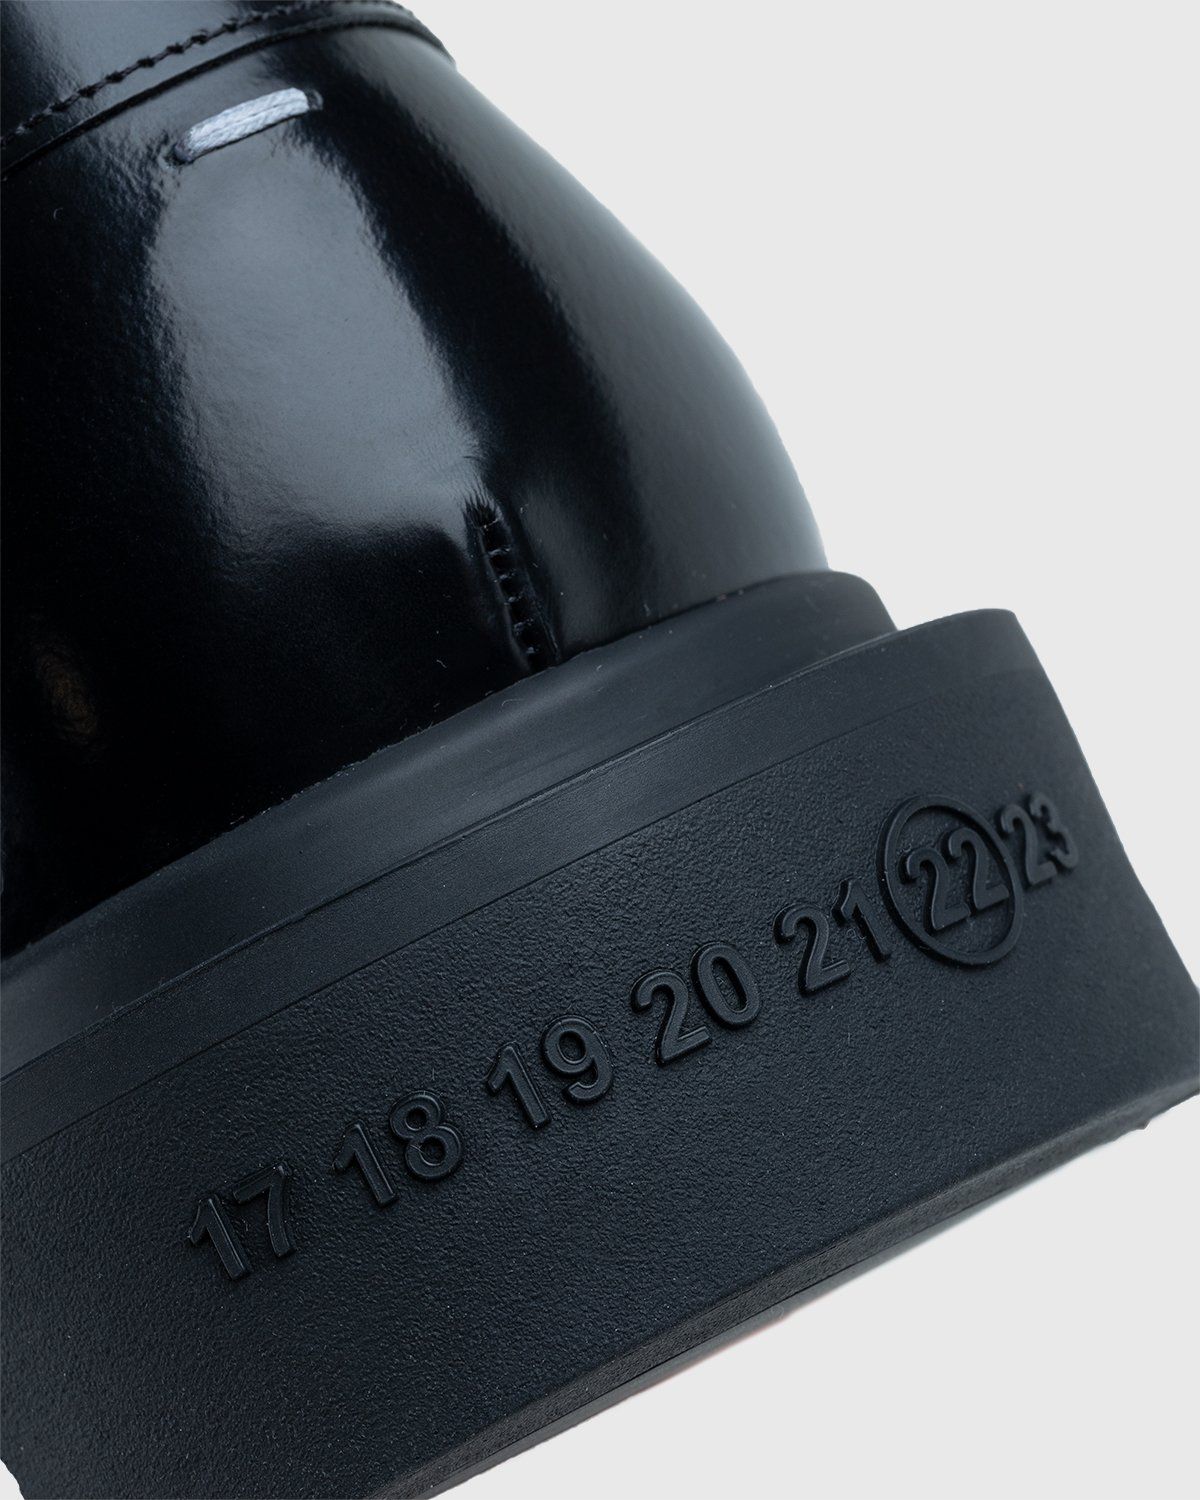 Maison Margiela – Leather Loafers Black - Loafers - Black - Image 5